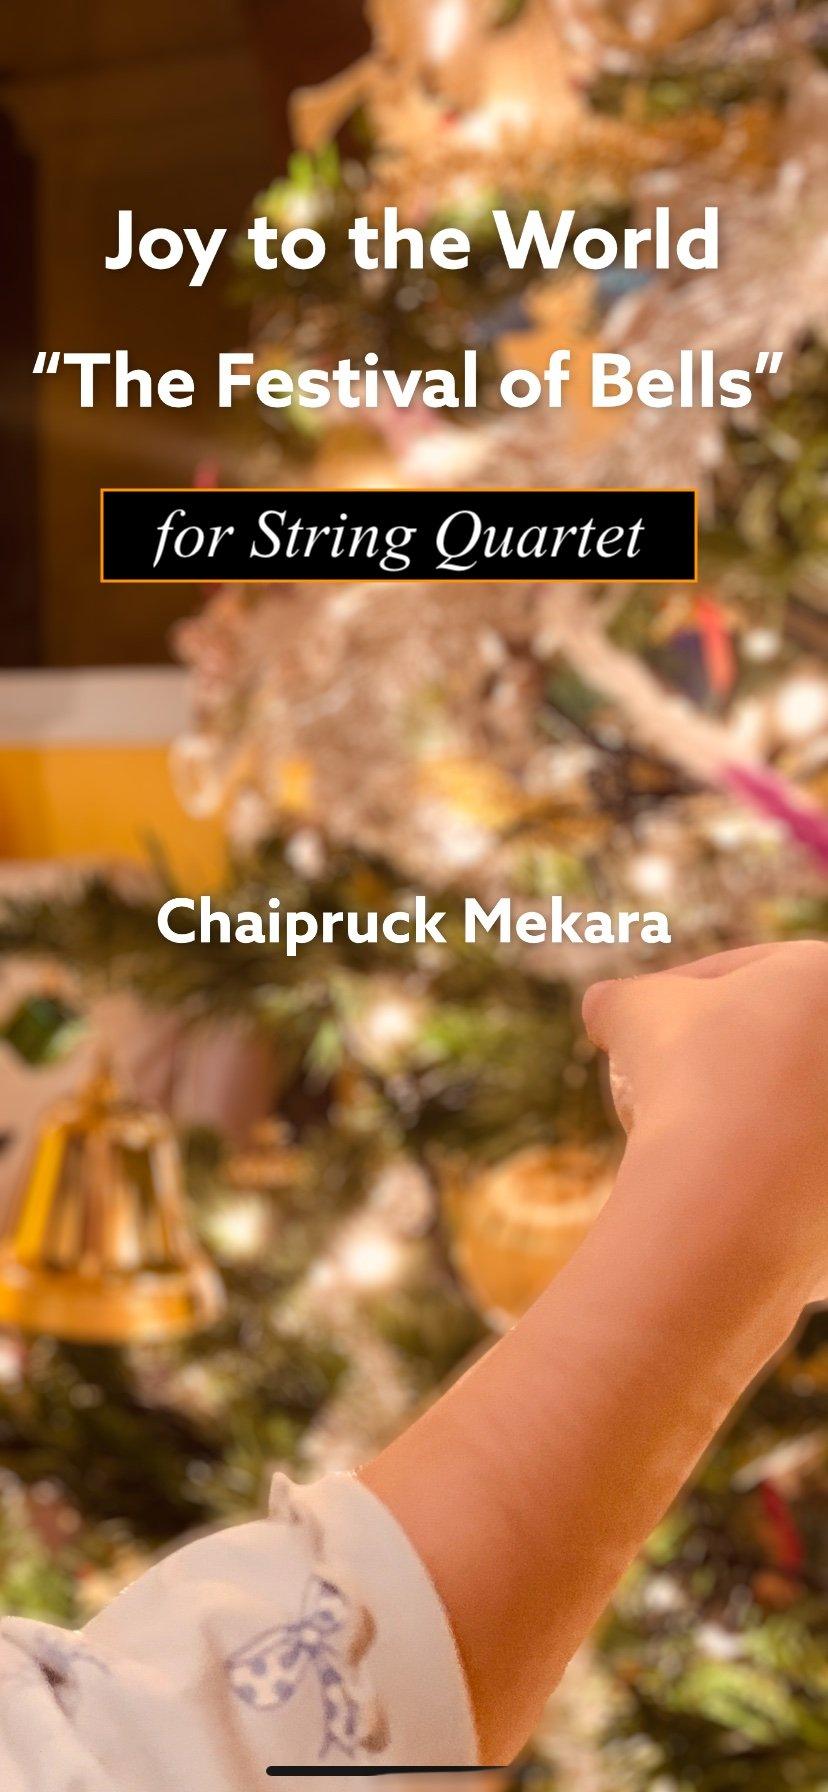 Joy to the World for String Quartet - ChaipruckMekara